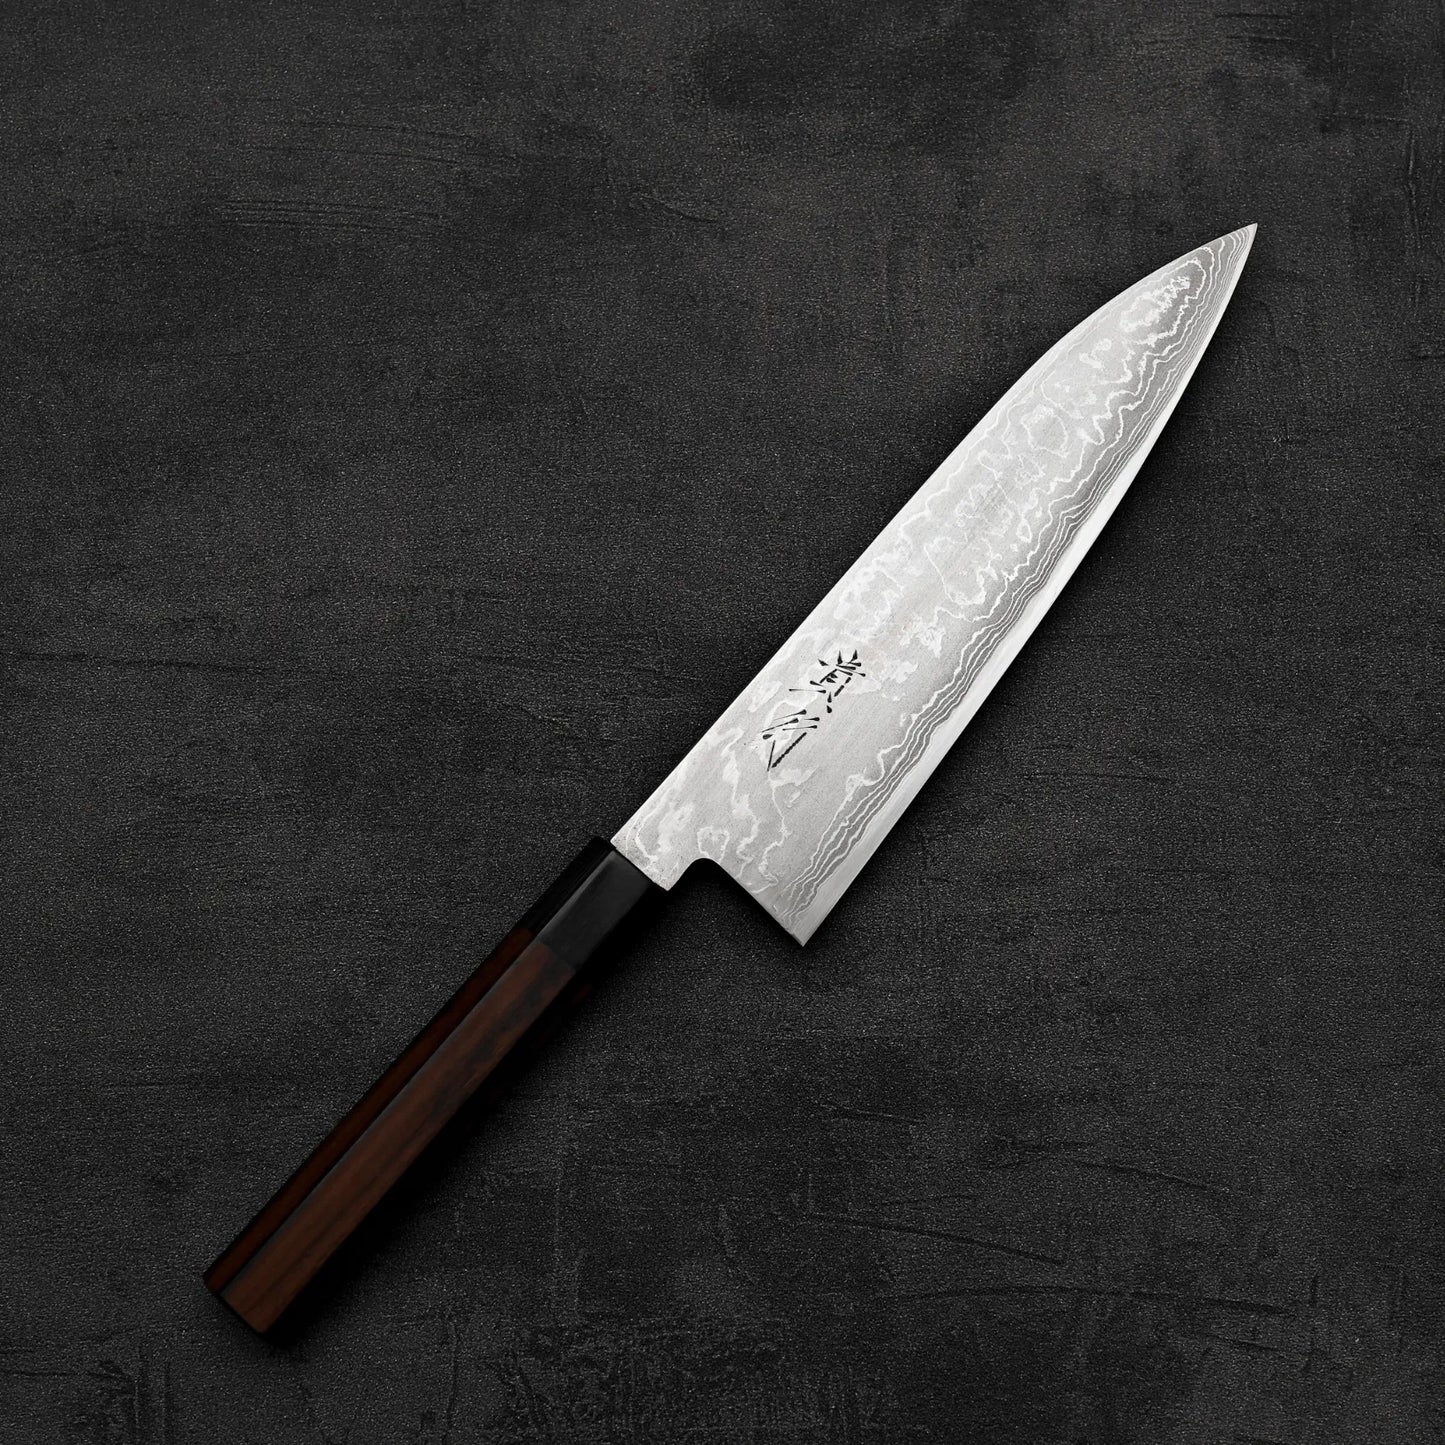 Top down view of Takayuki Iwai aogami#2 damascus 210mm gyuto knife